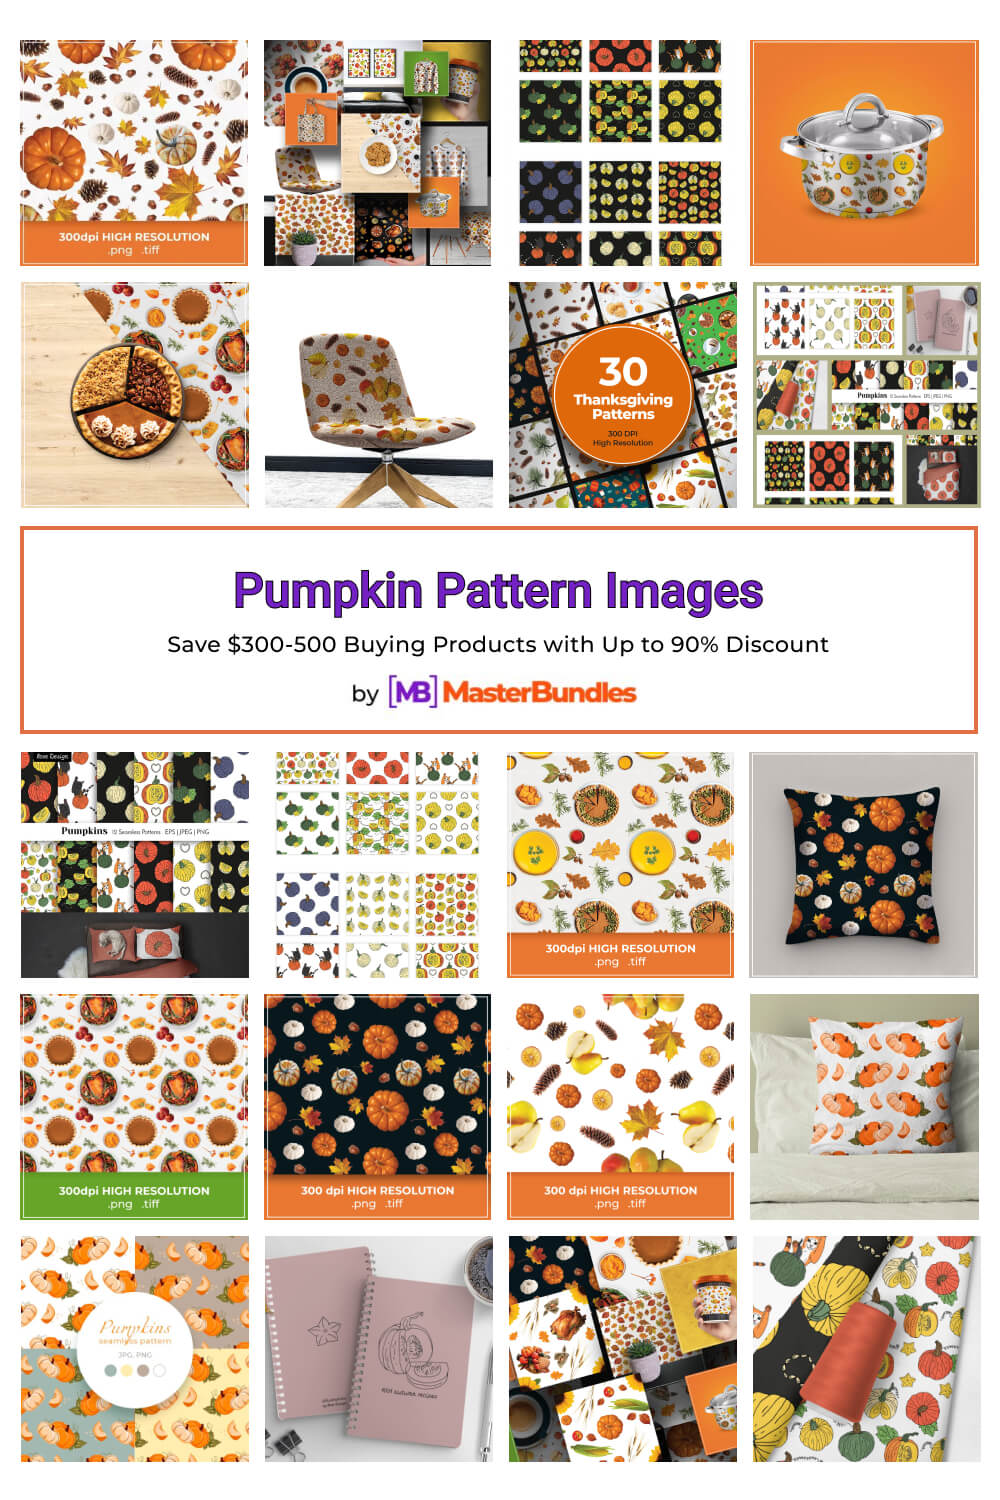 pumpkin pattern images pinterest image.